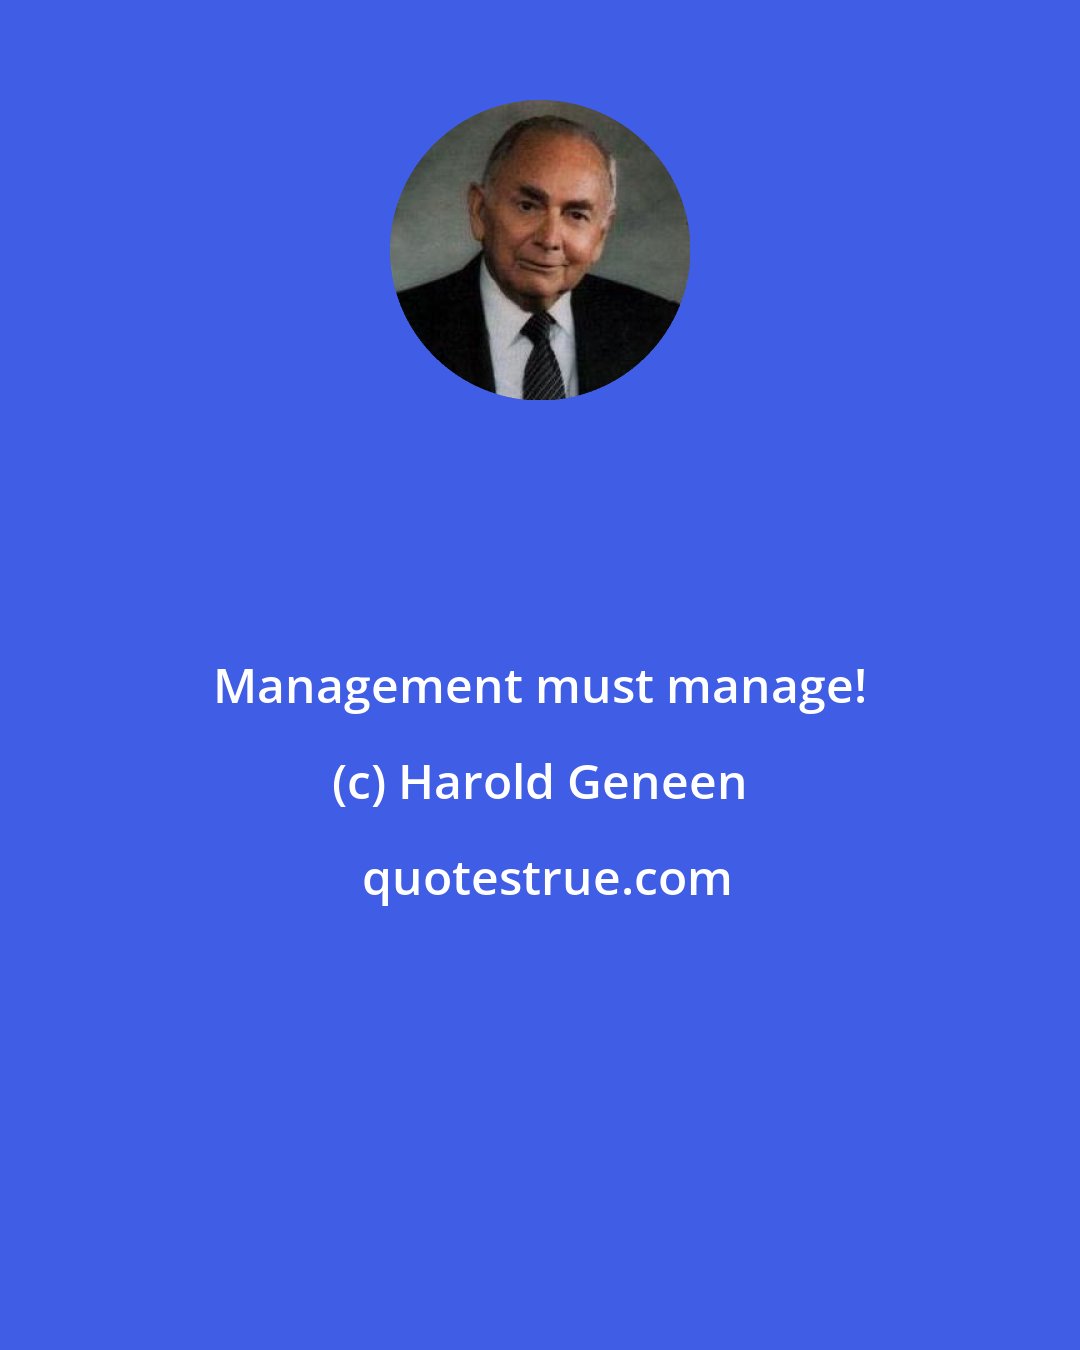 Harold Geneen: Management must manage!